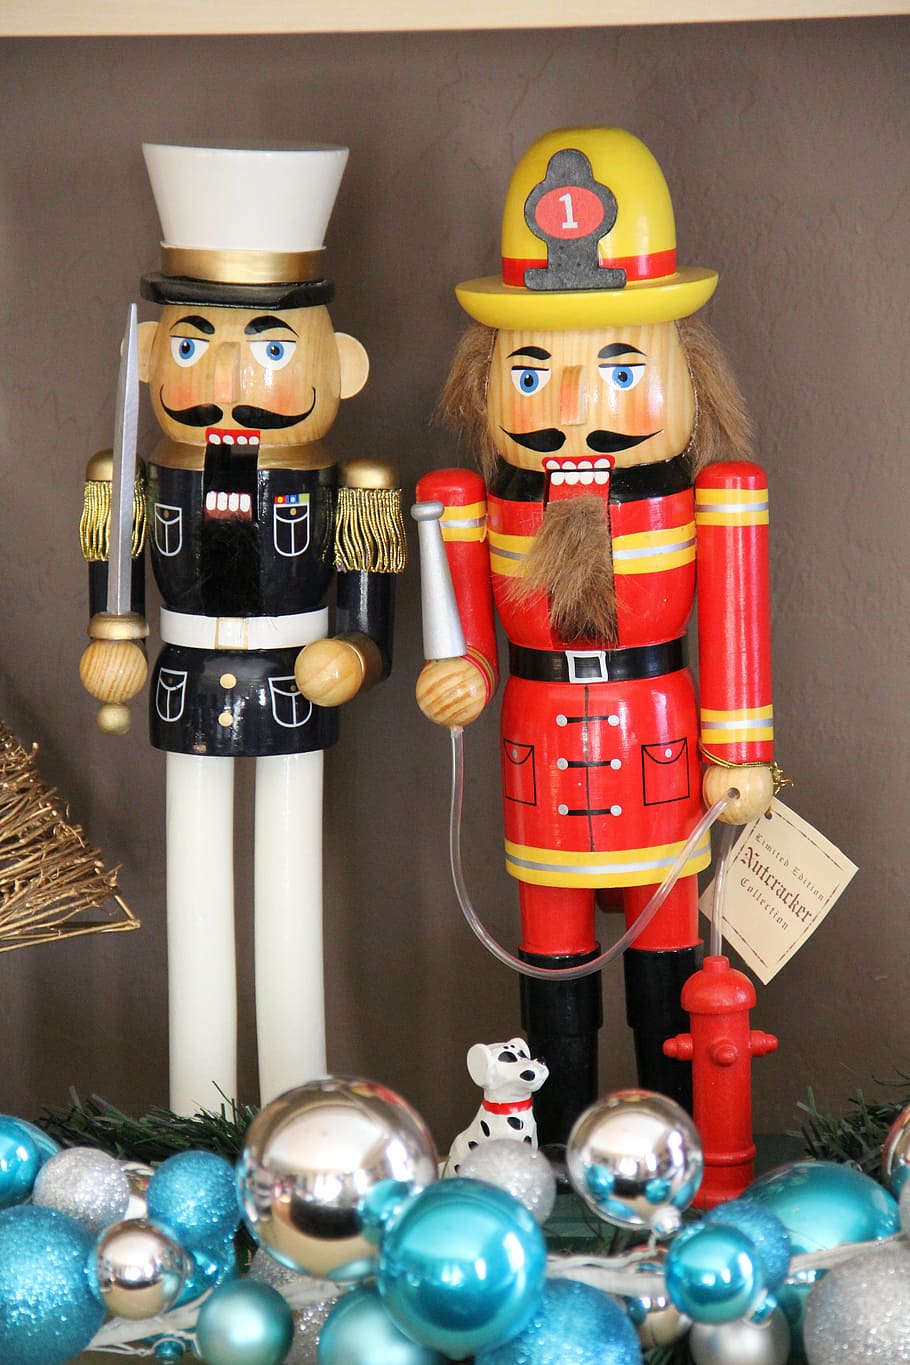 cascanueces, decoración, figura, madera, Navidad, representación, representación humana, en interiores, vacaciones, adornos navideños